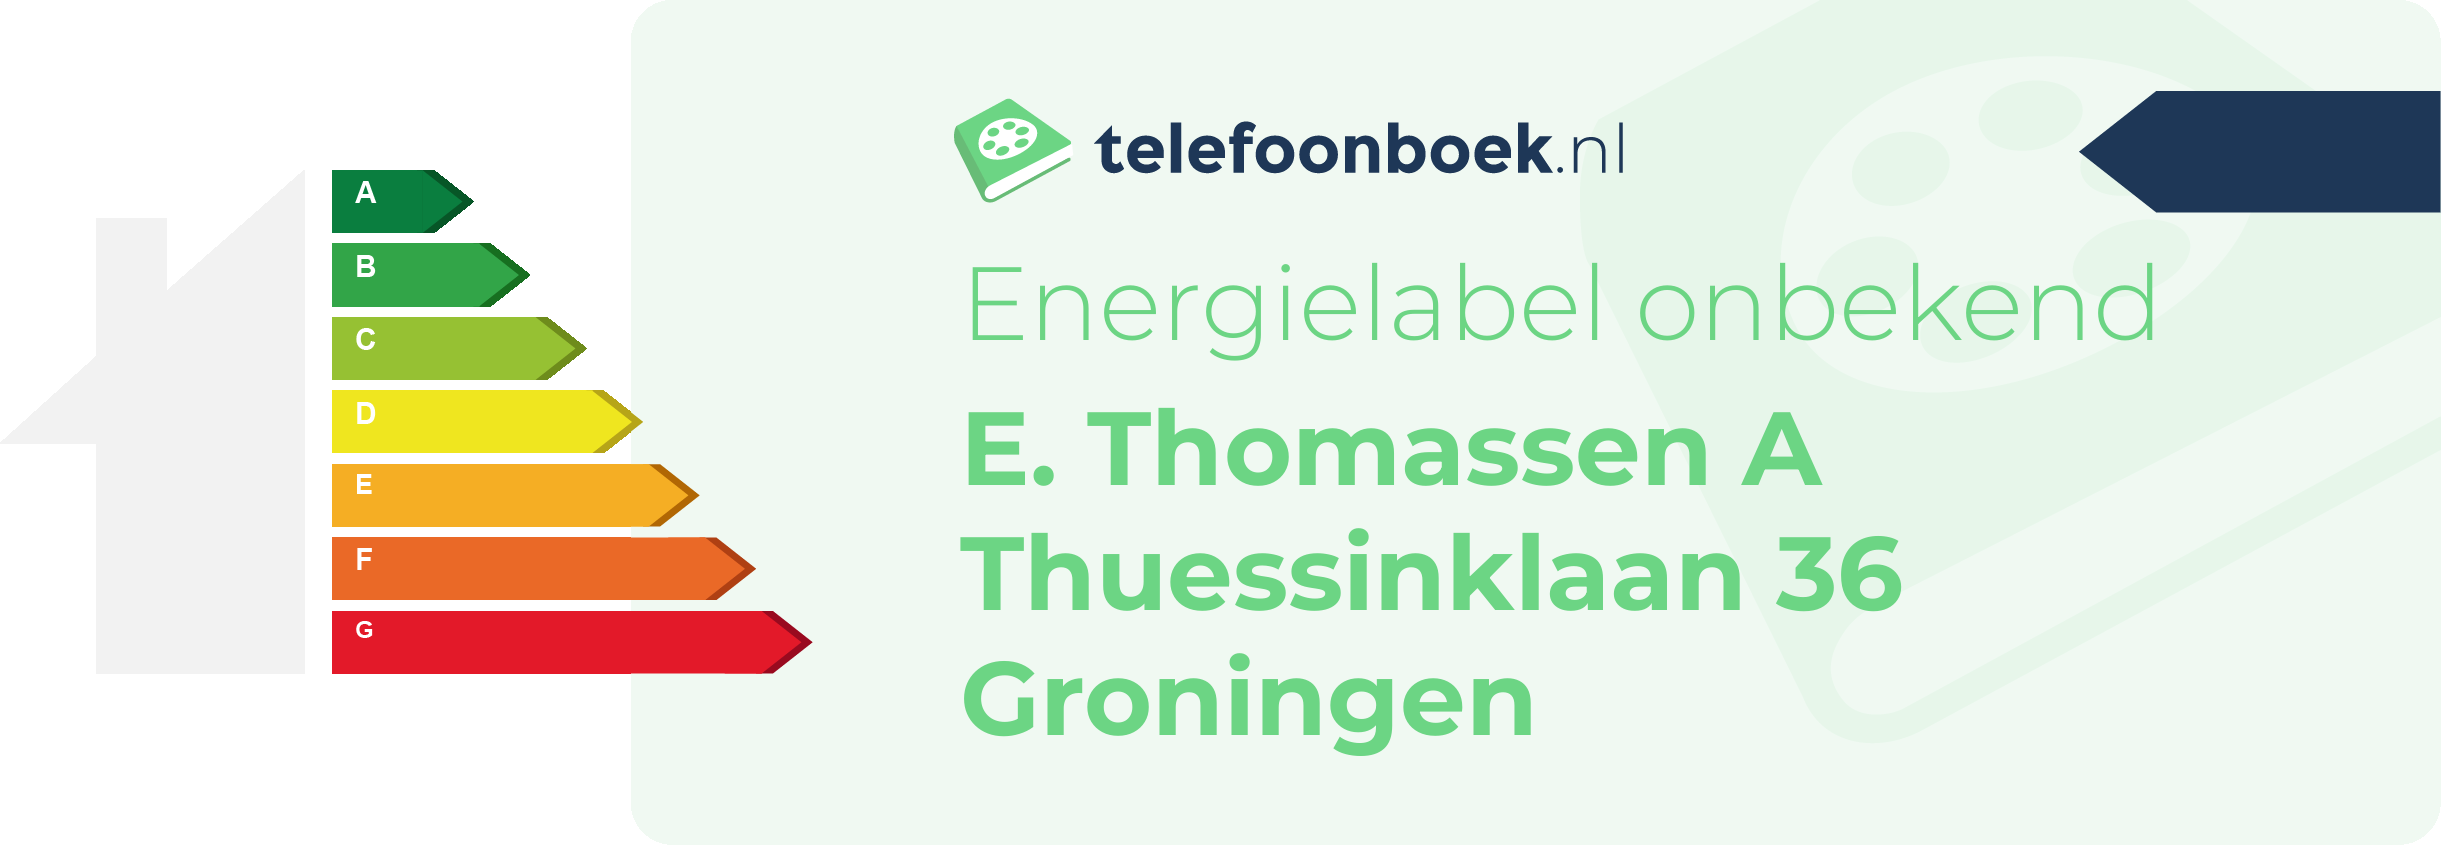 Energielabel E. Thomassen A Thuessinklaan 36 Groningen